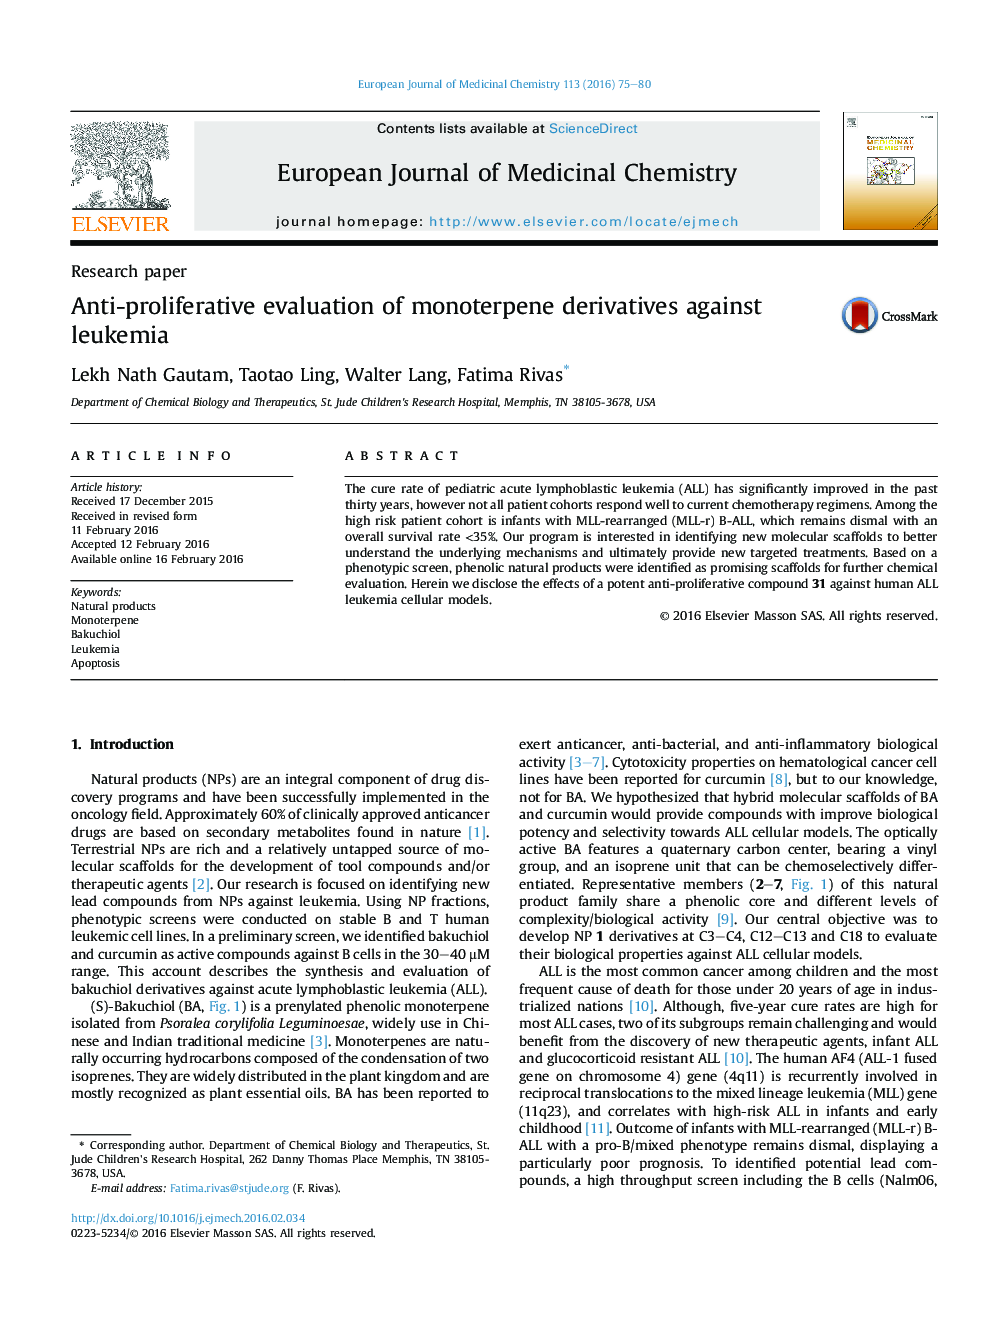 Anti-proliferative evaluation of monoterpene derivatives against leukemia